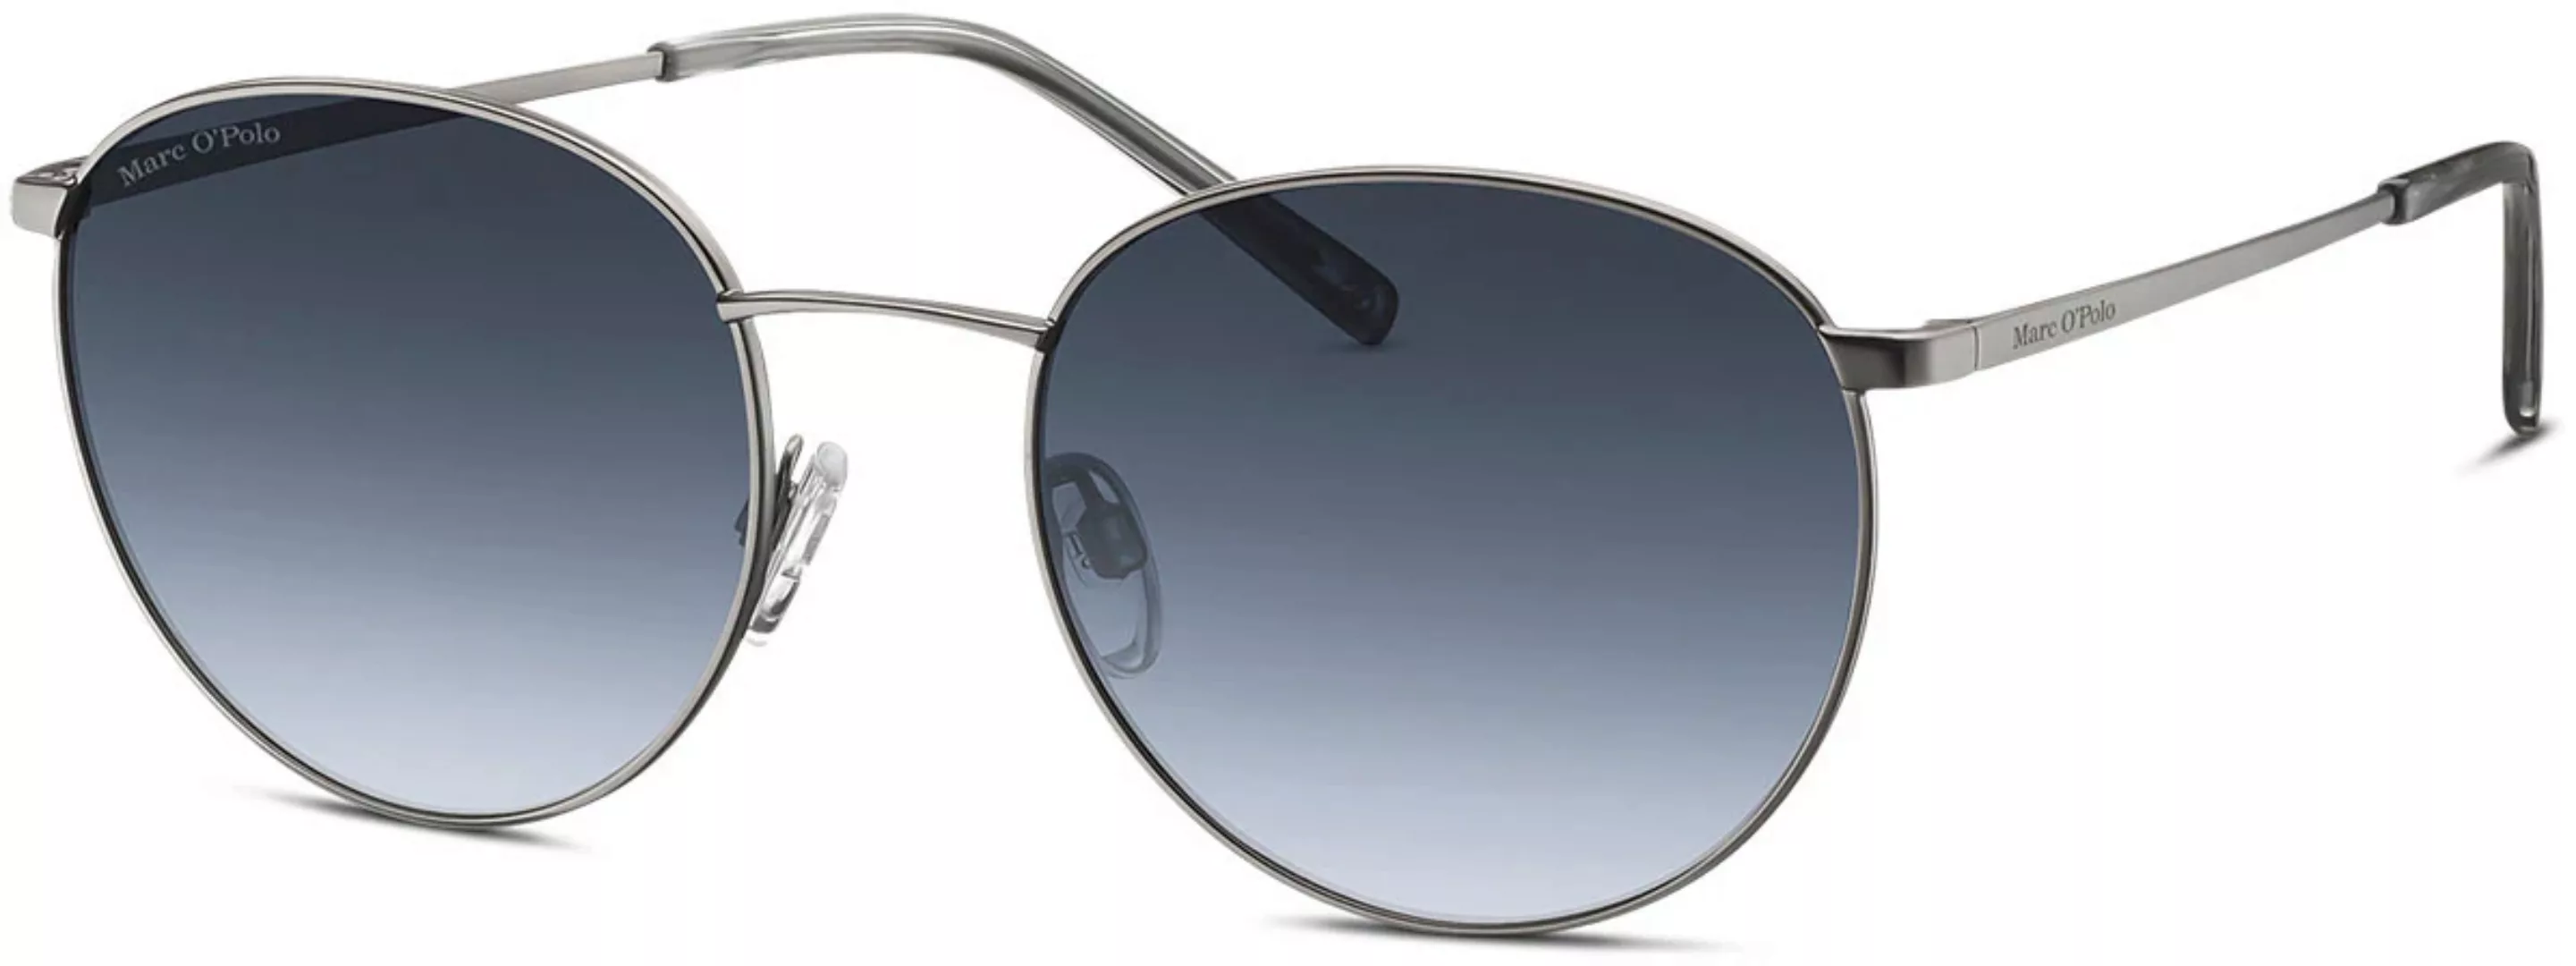 Marc OPolo Sonnenbrille "Modell 505104", Panto-Form günstig online kaufen